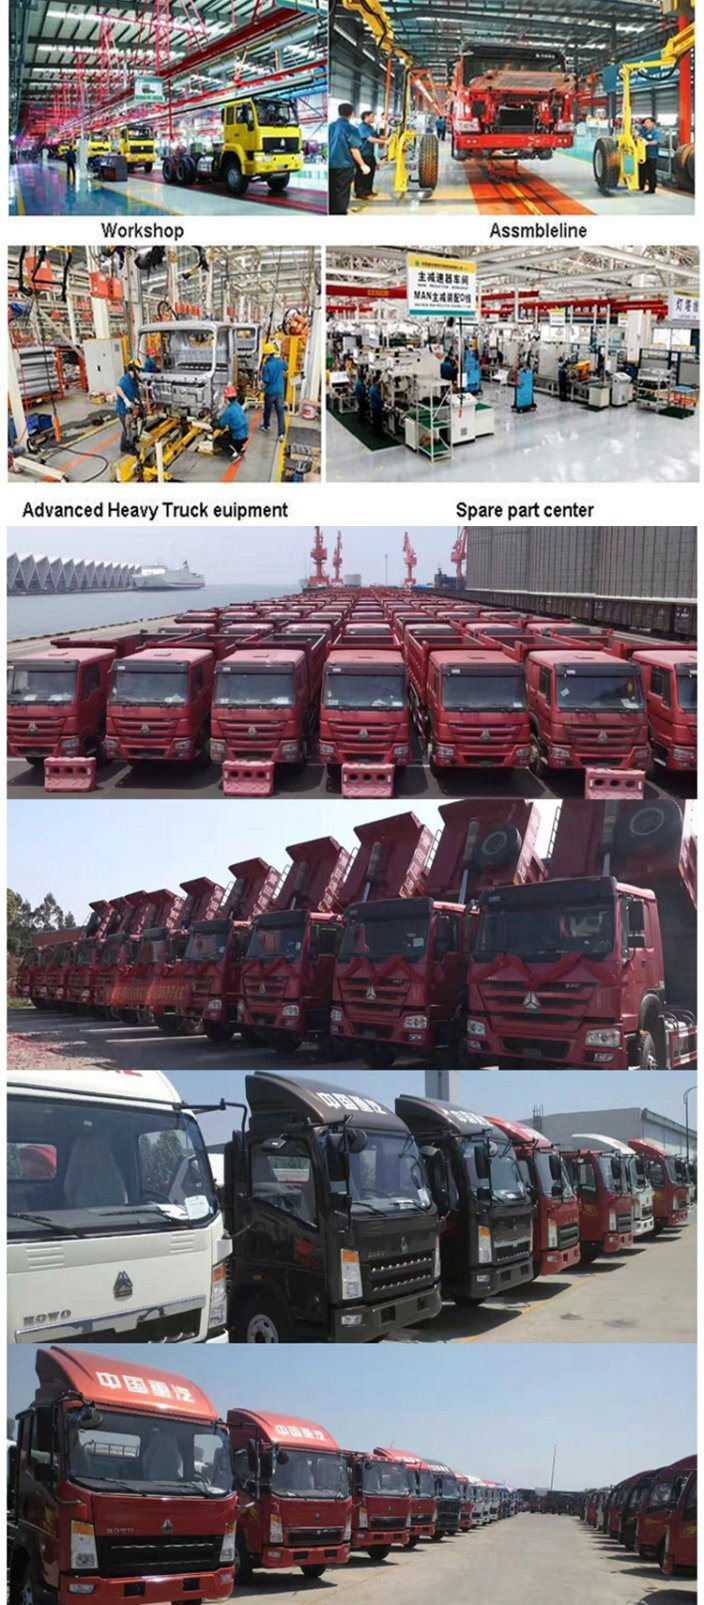 China Sinotruk Golden Prince 8X4 Dump Tipper Truck Low Price